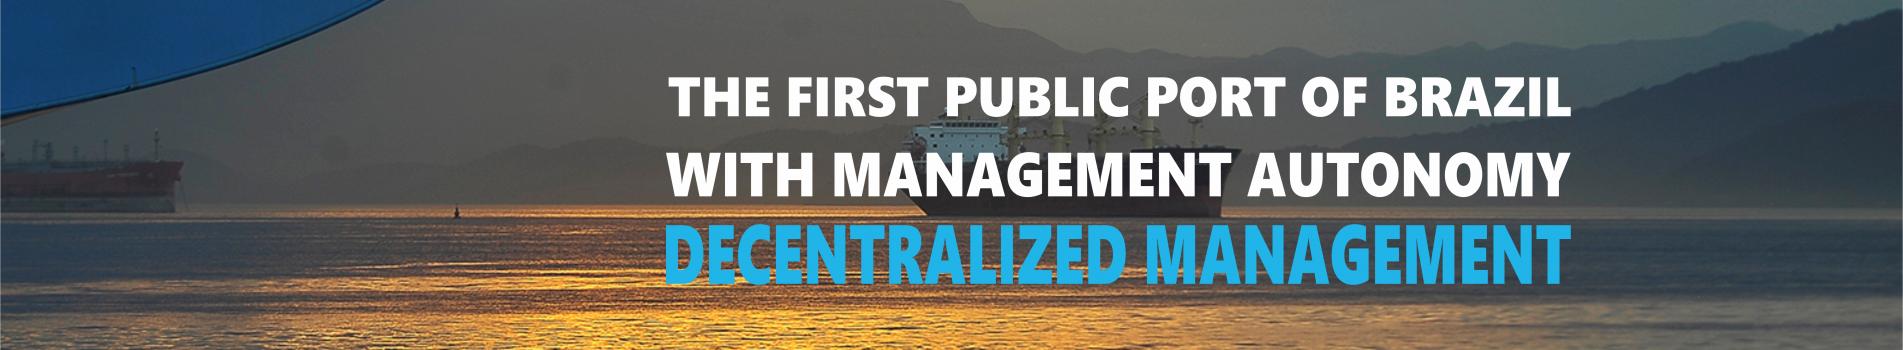 banner decentralized management